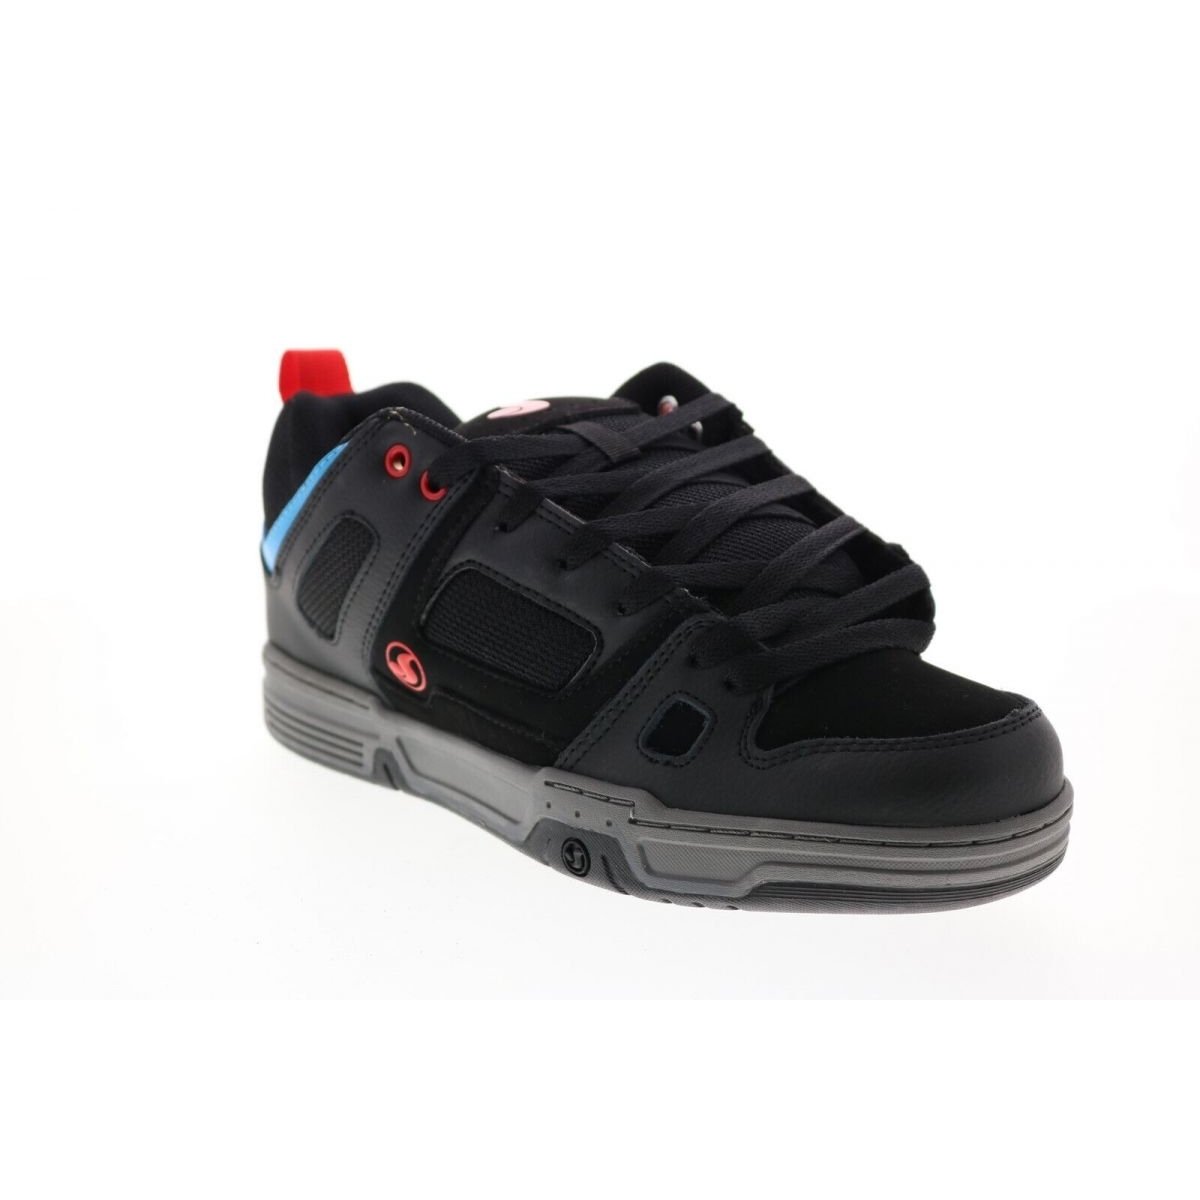 DVS Men's Gambol Skate Shoe 0 BLACK FIERY RED BLUE NUBUCK - BLACK FIERY RED BLUE NUBUCK, 6